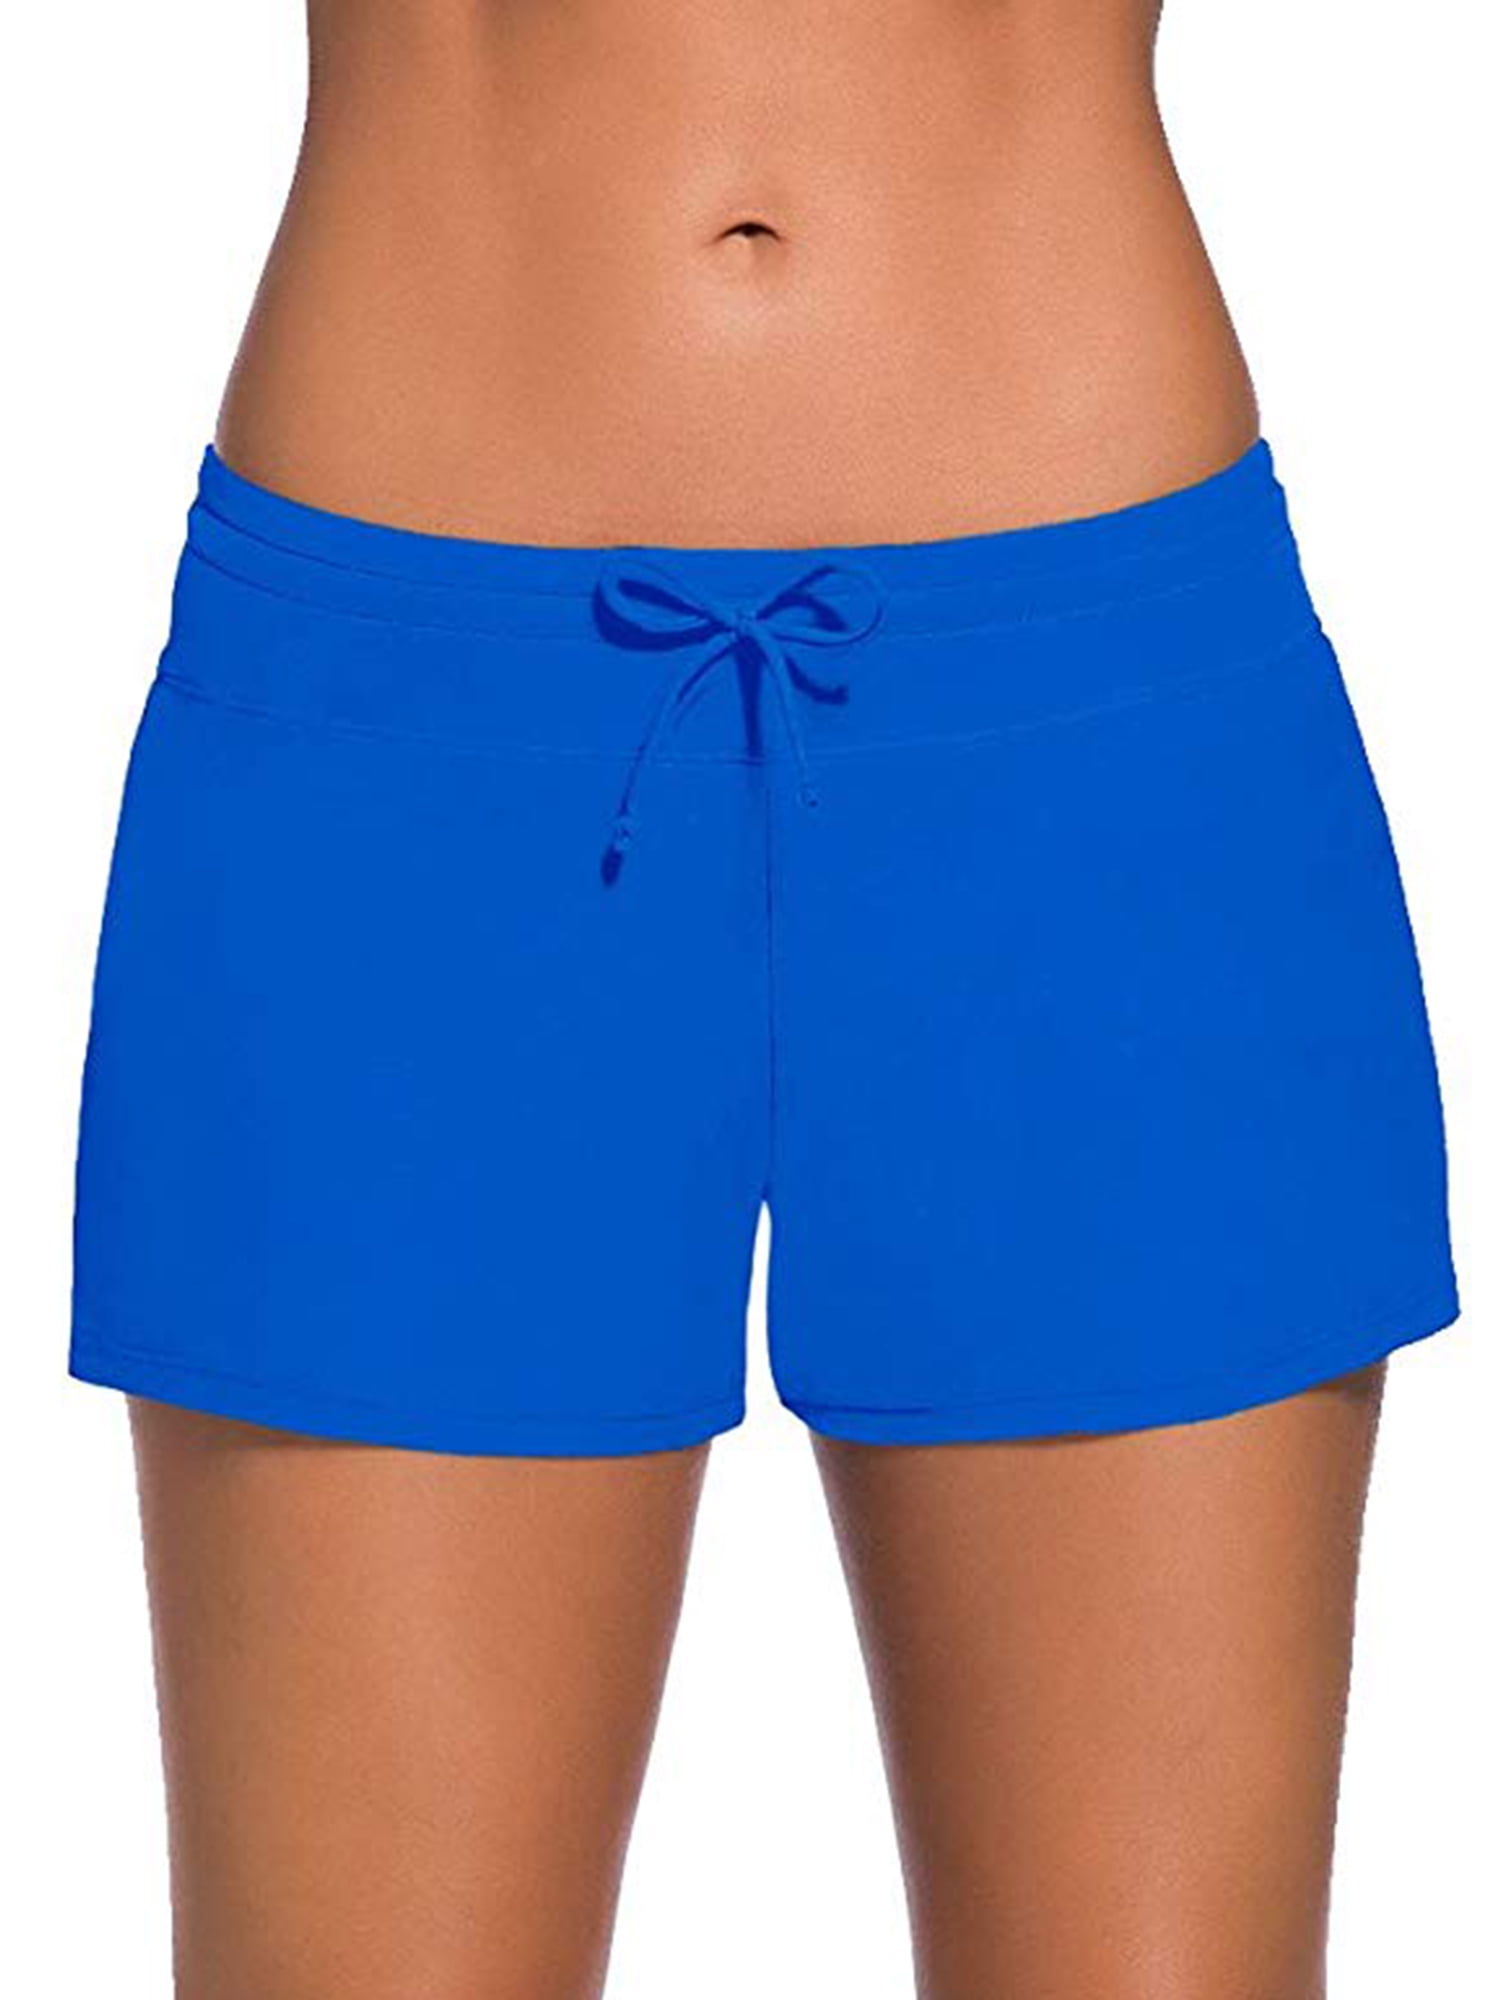 SAYFUT Women's Fashion Adjustable Waistband Swimsuit Bottom Boy Shorts ...